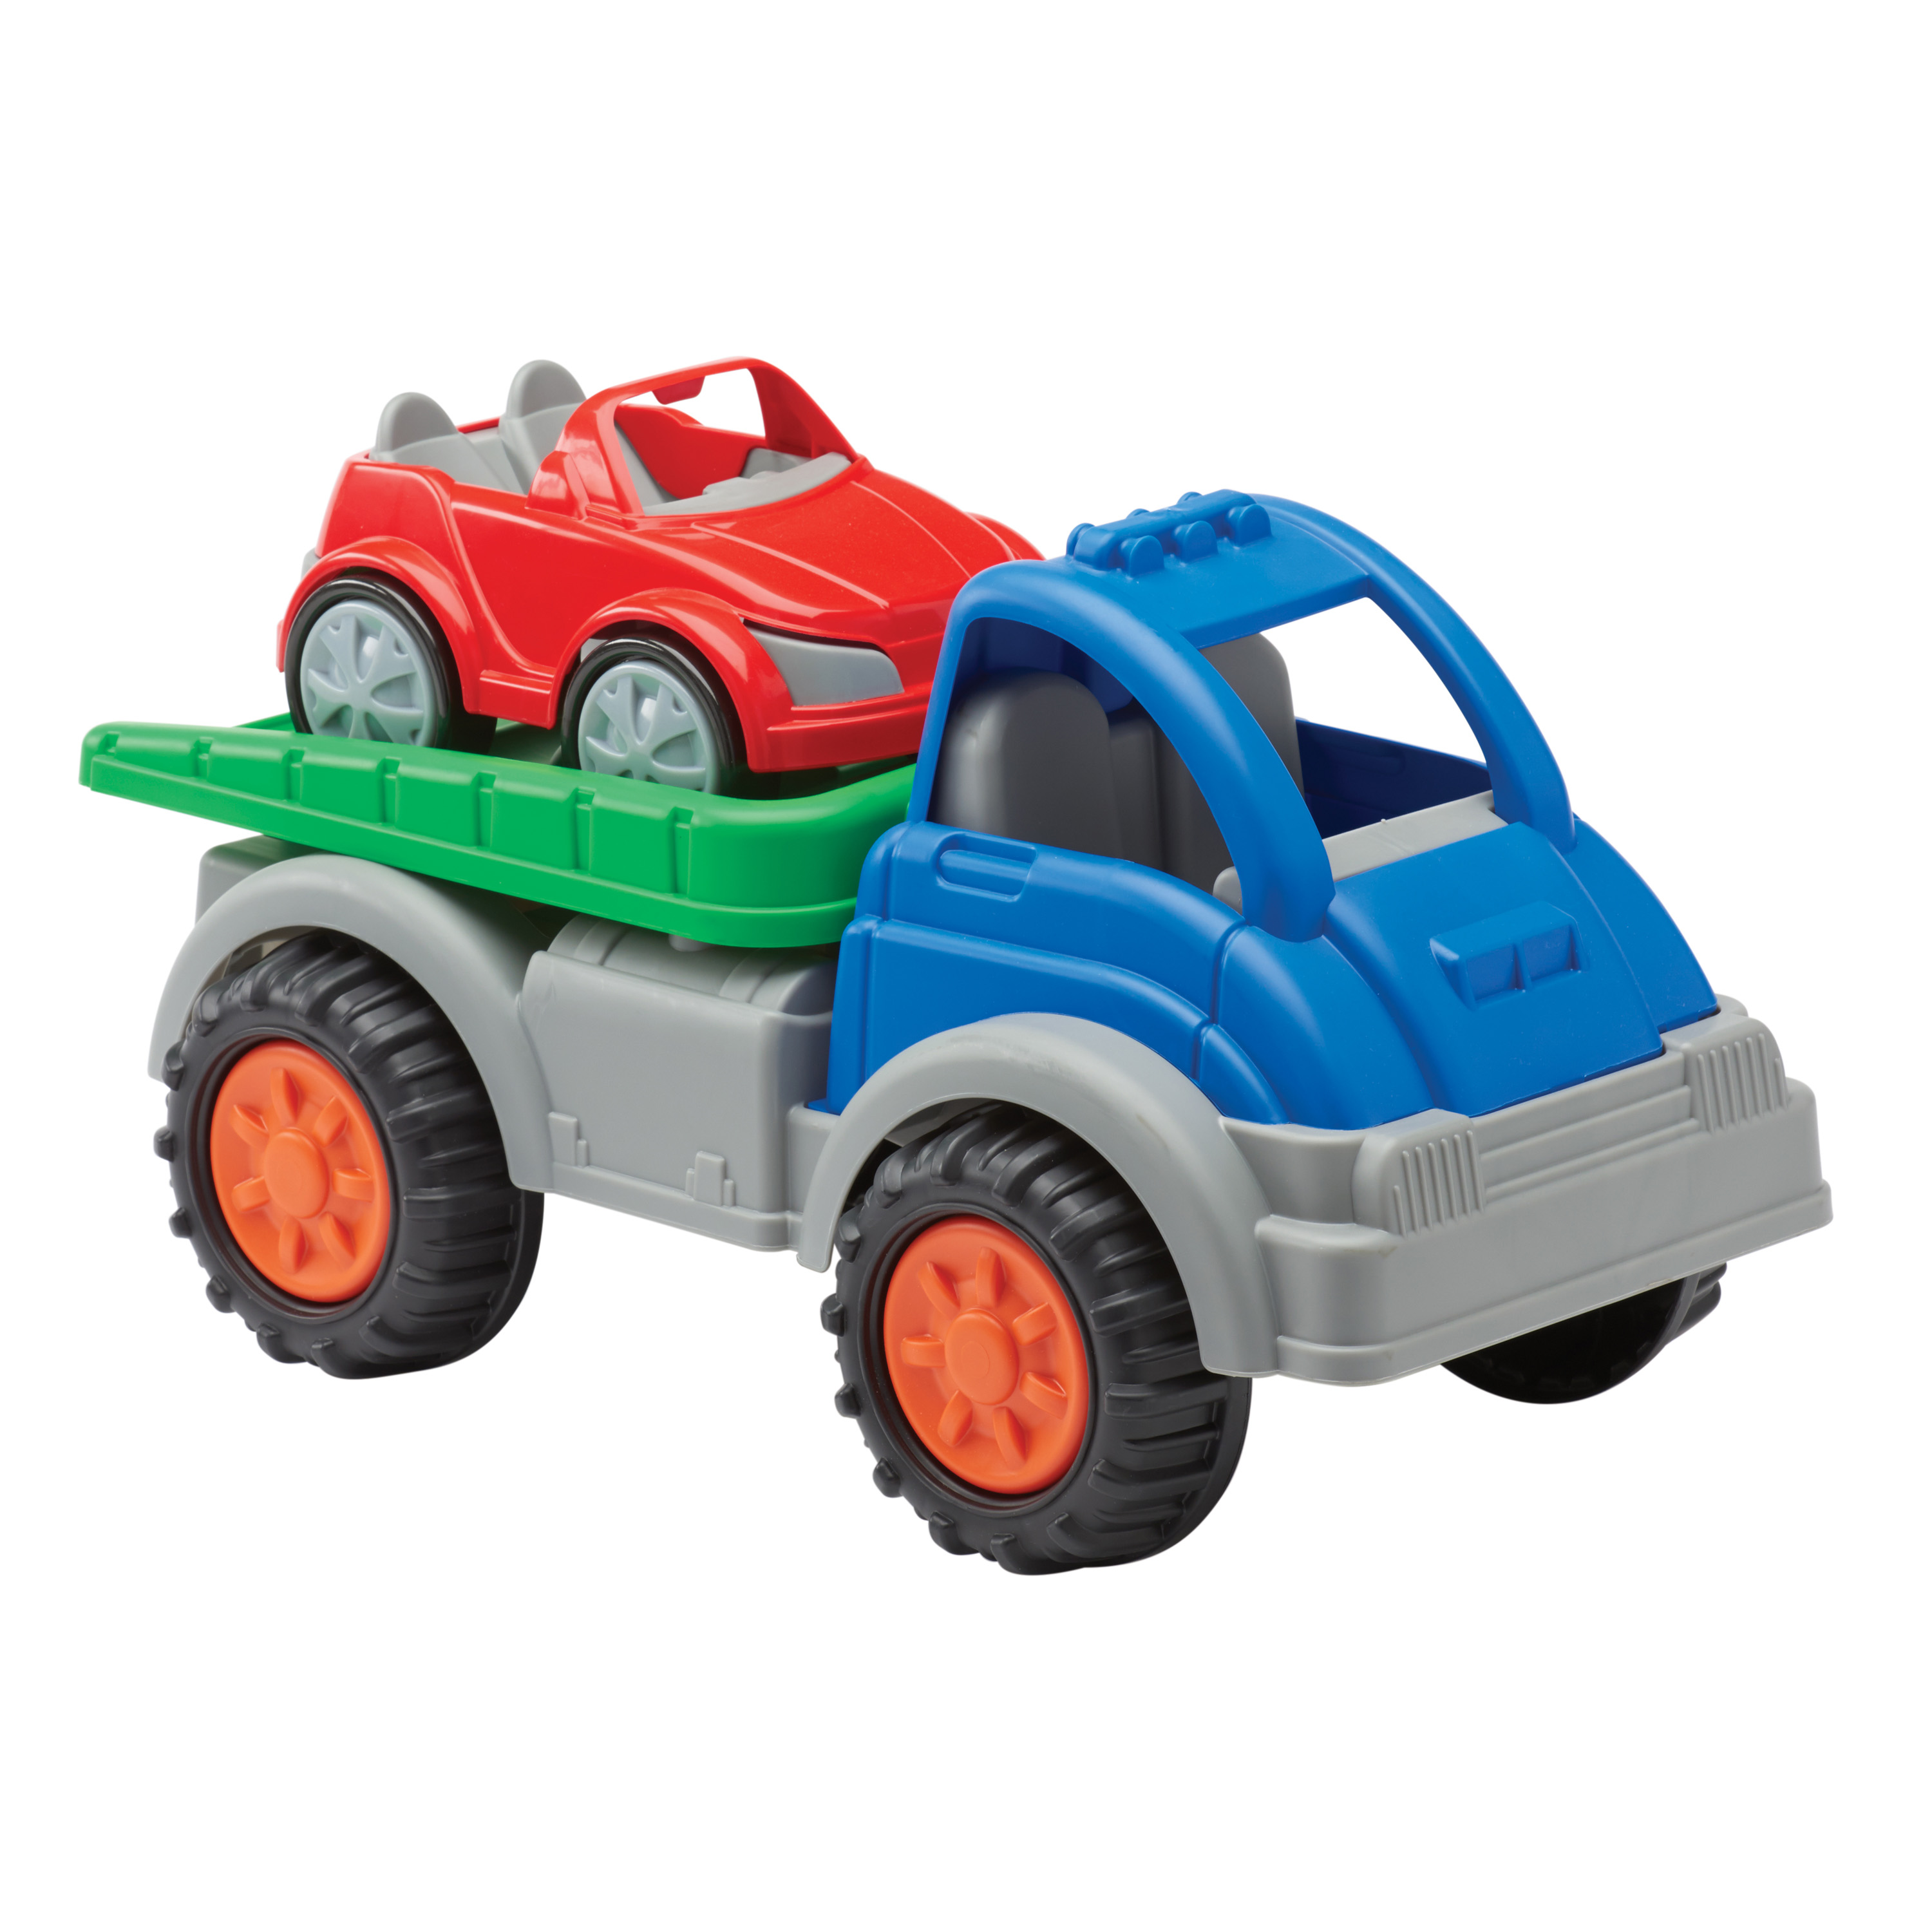 American Plastic Toys Gigantic Car Hauler Vehicle - Walmart.com $10.00